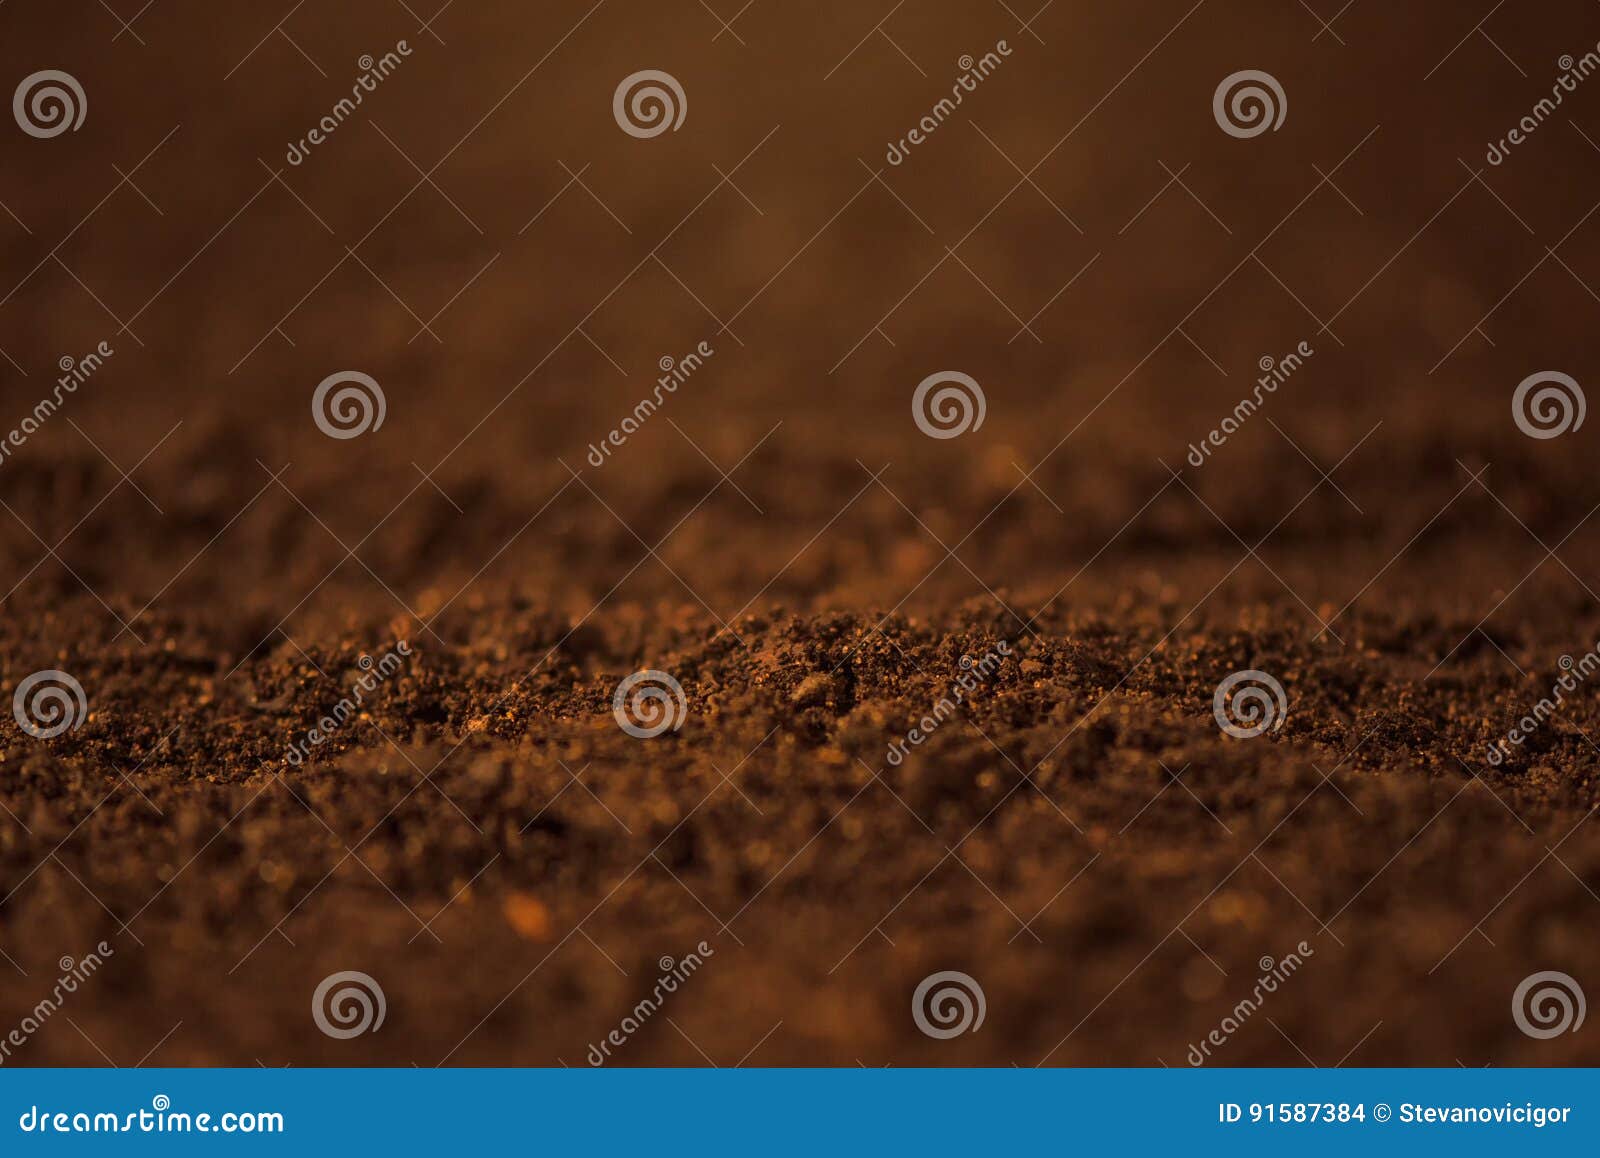 soil close up